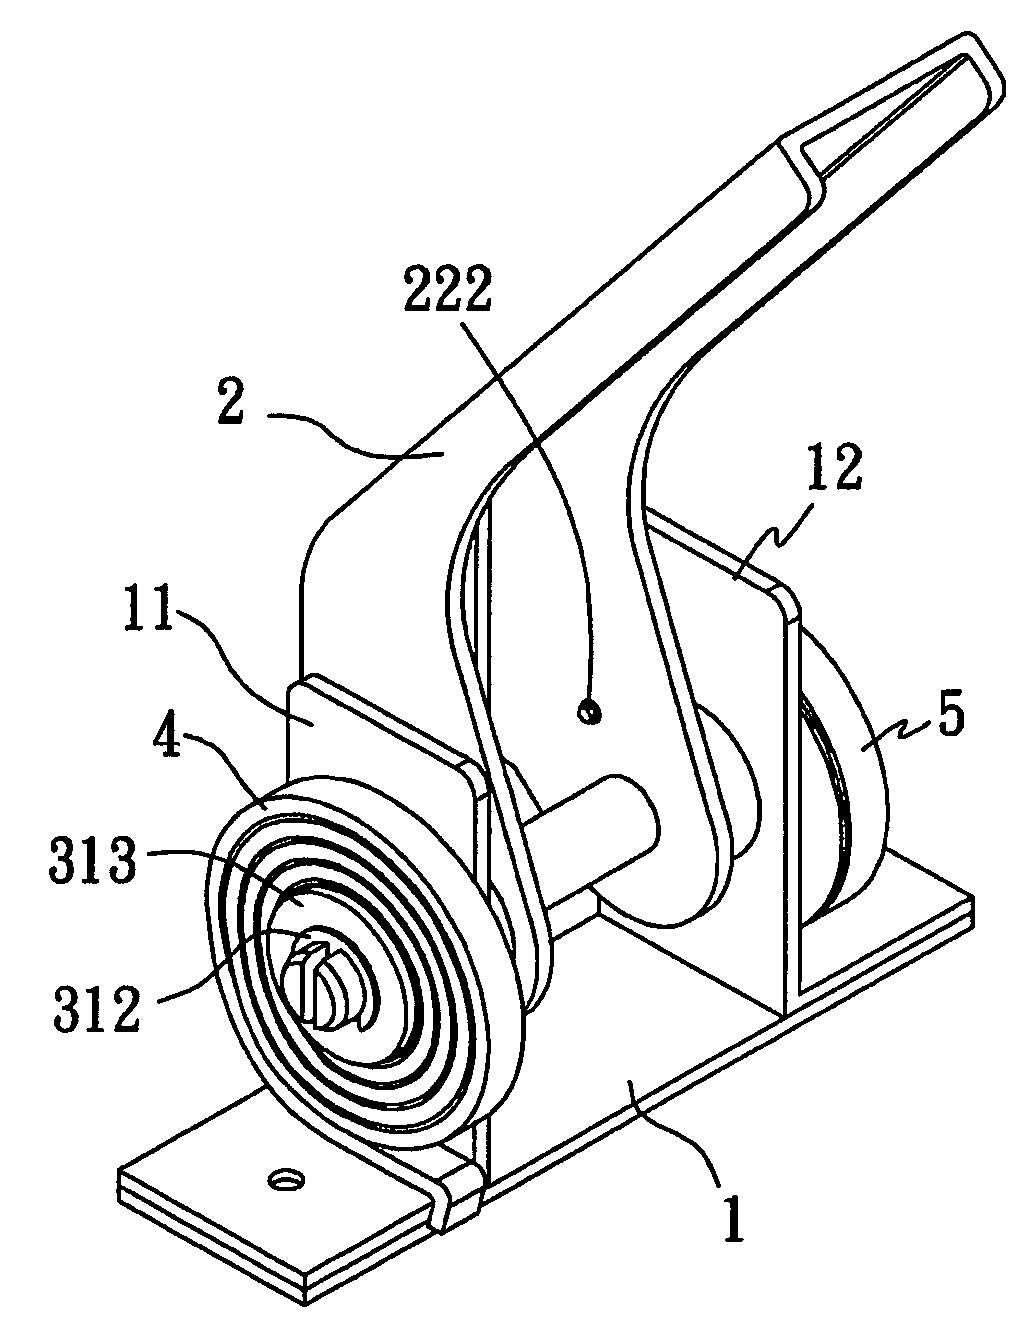 Hinge mechanism for motor vehicle